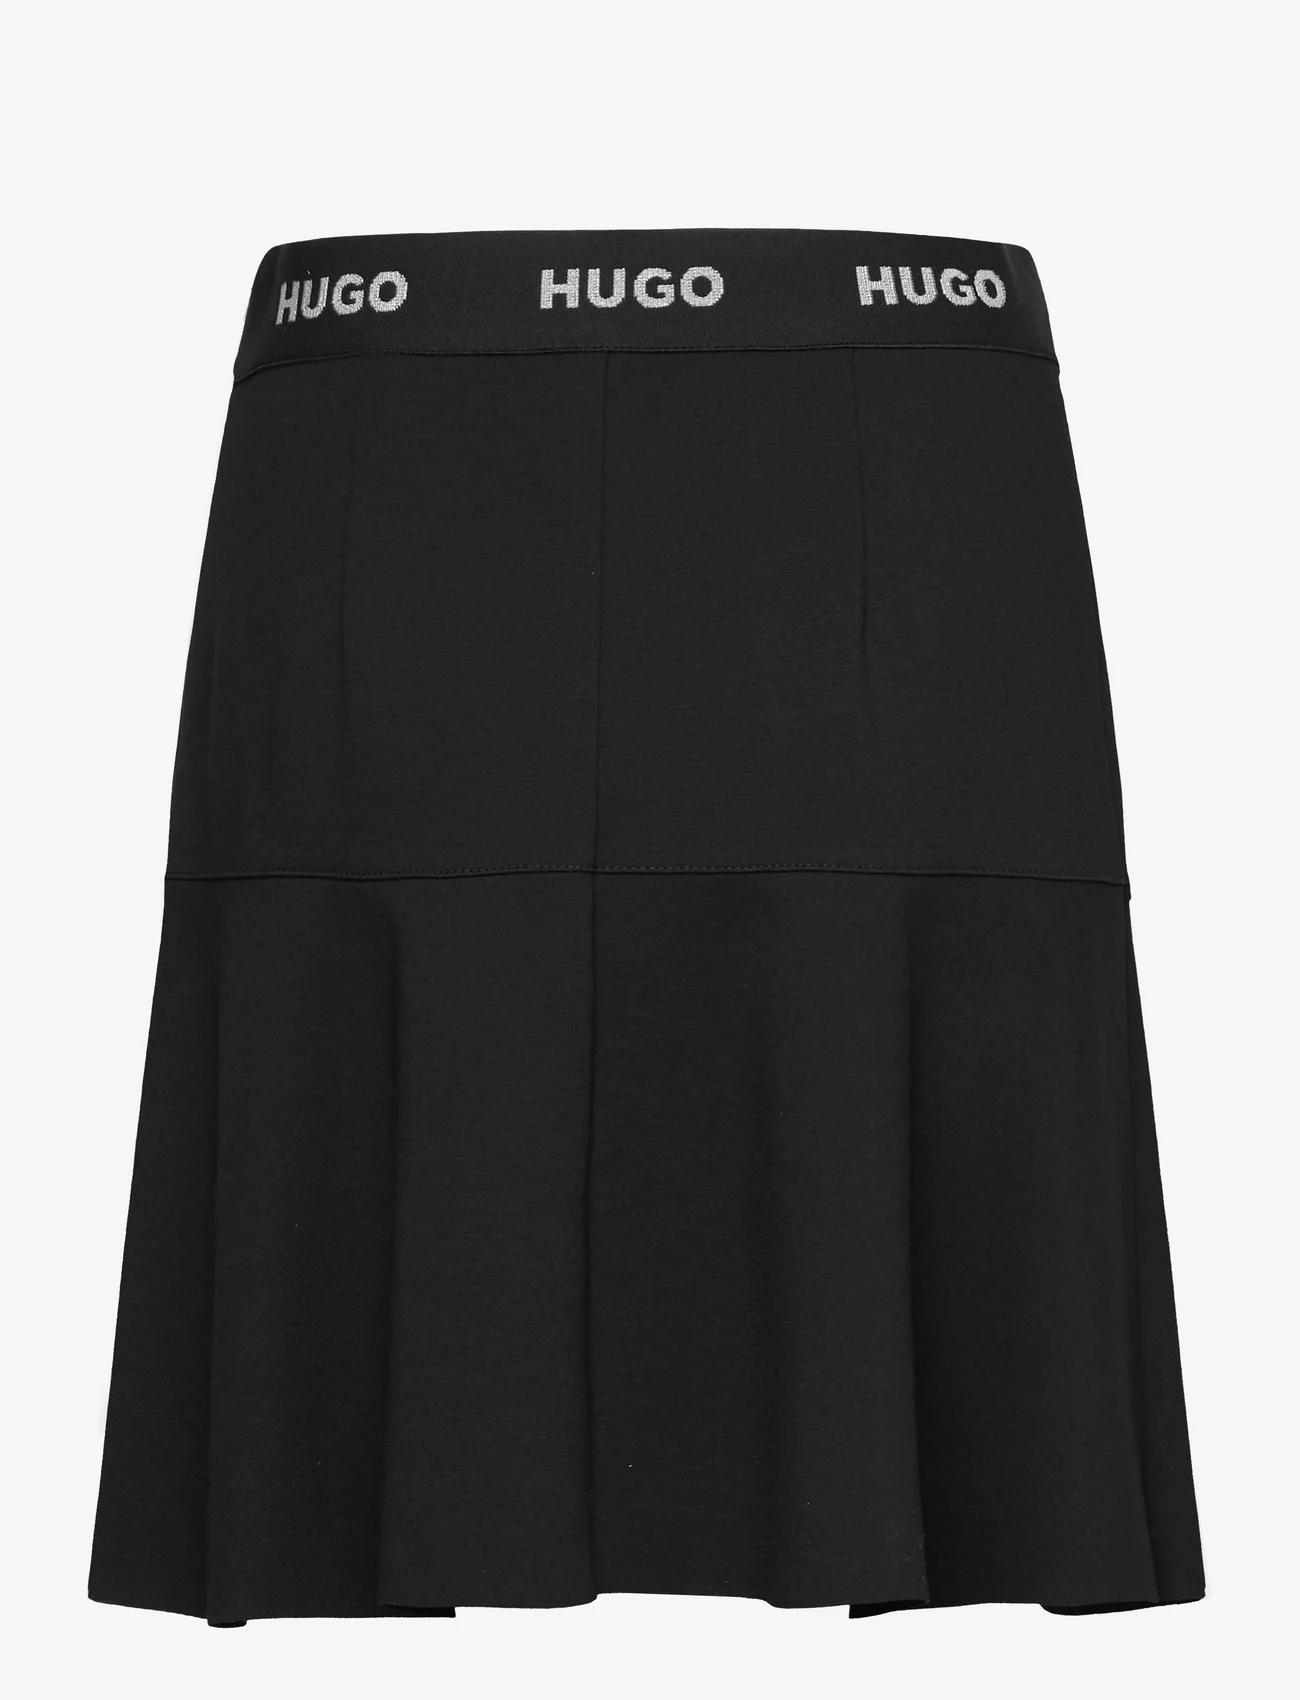 HUGO - Relosana - kurze röcke - black - 1